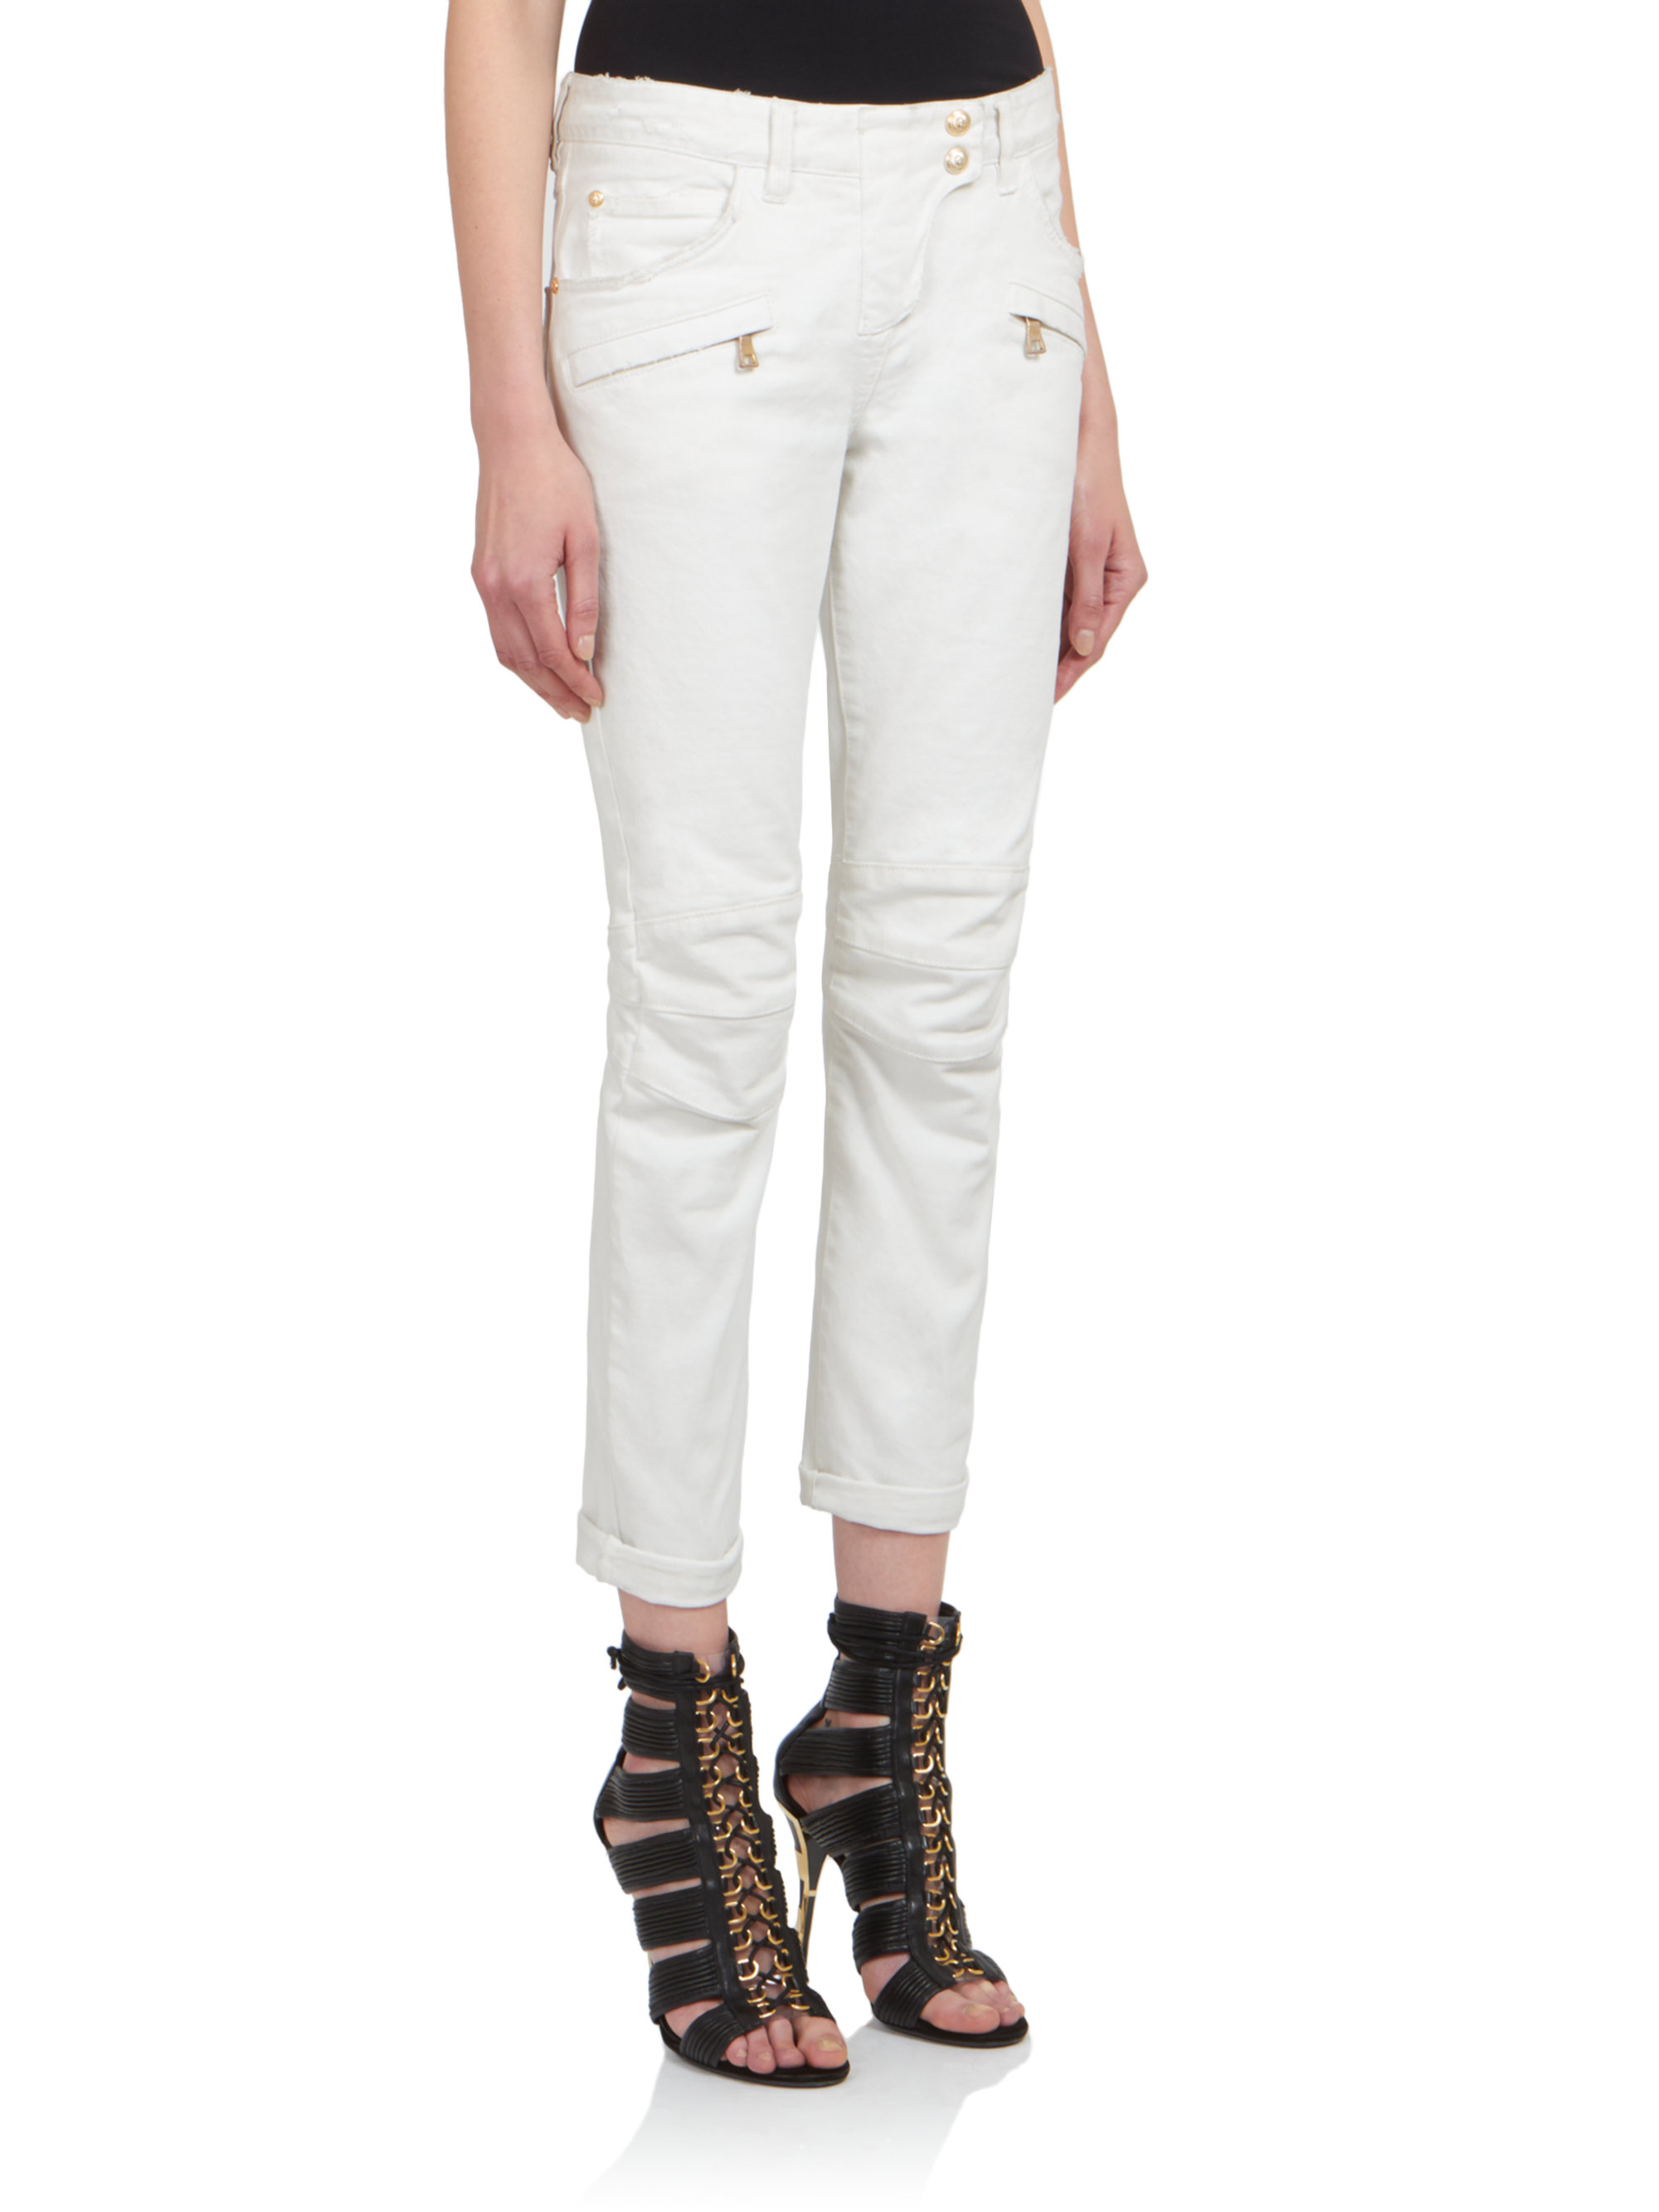 Balmain Cropped Moto Jeans in White | Lyst